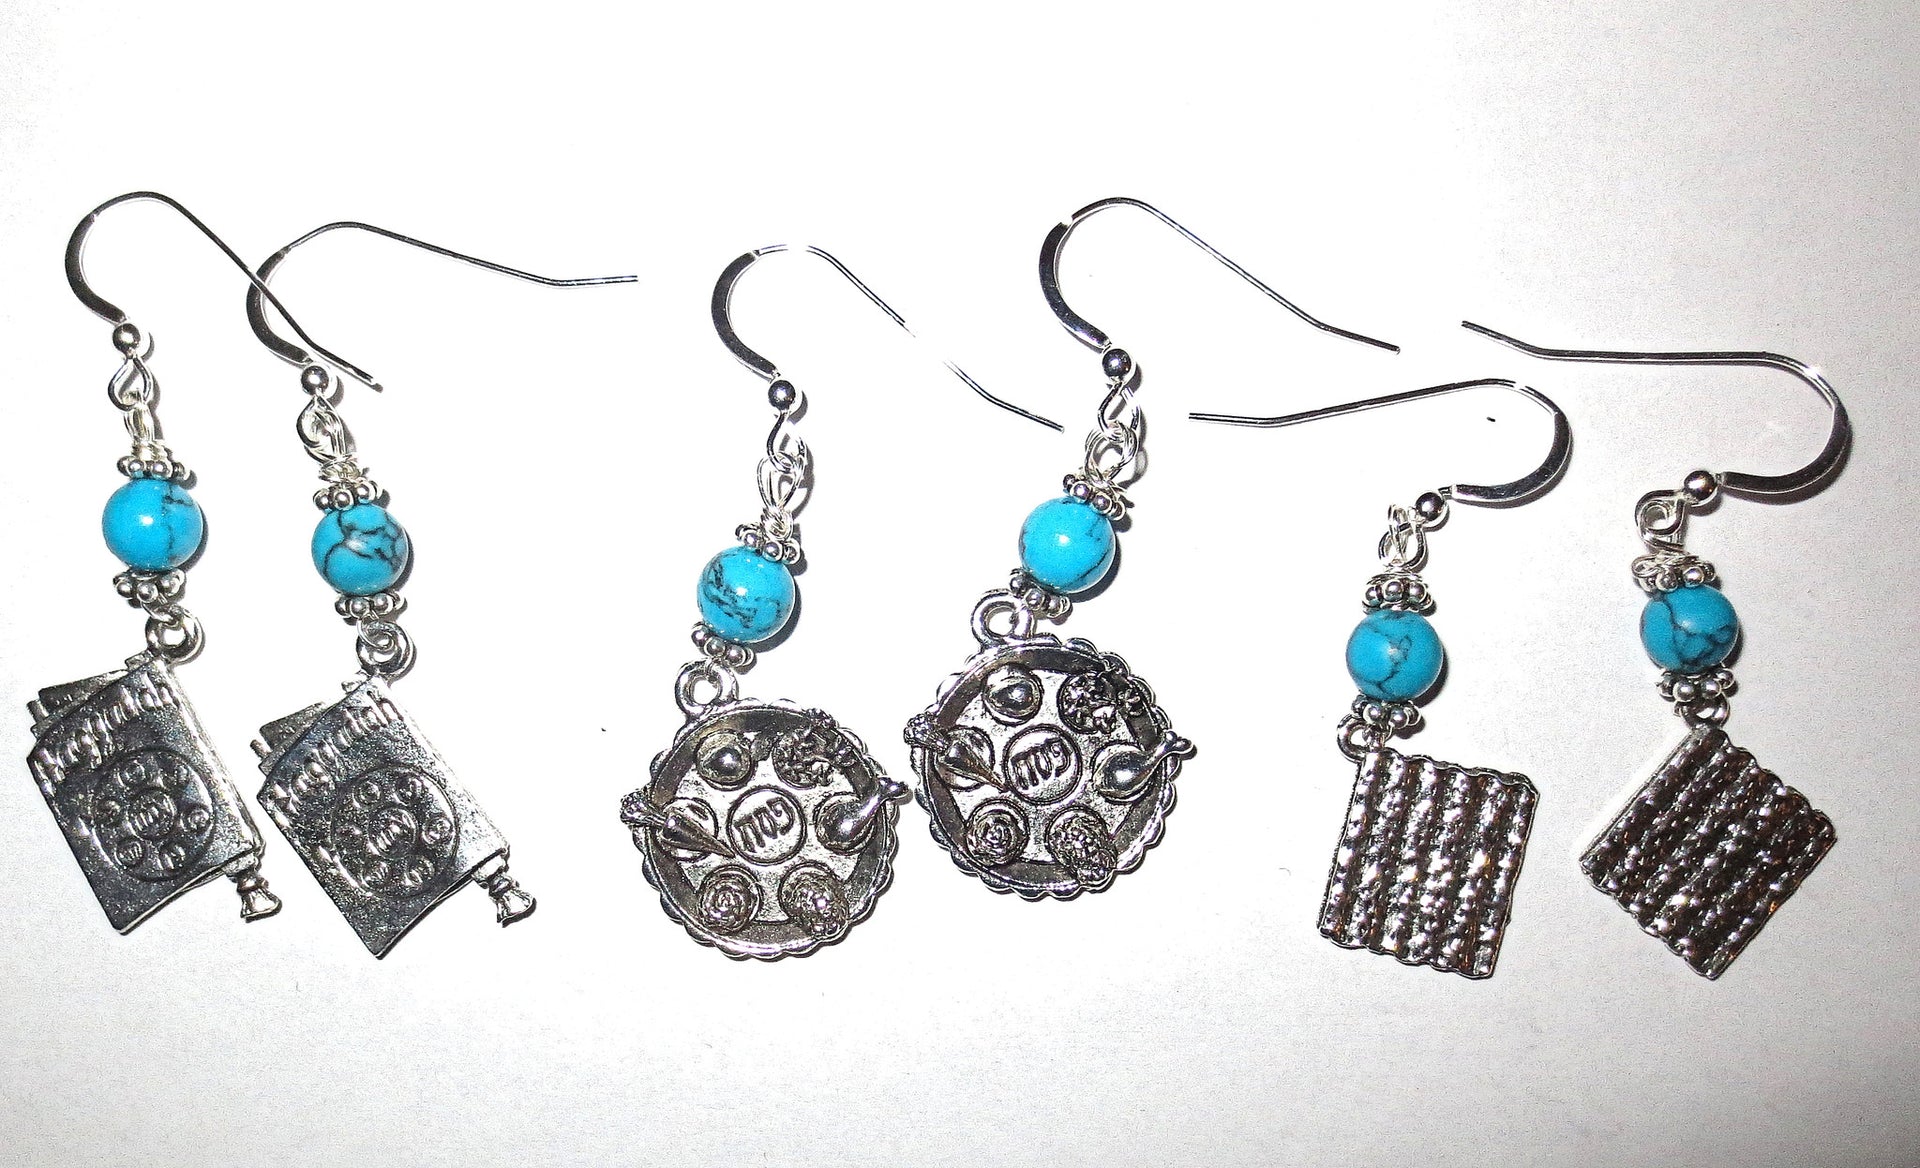 gemstone silver charm earrings for passover seder plates, matzah, haggadah